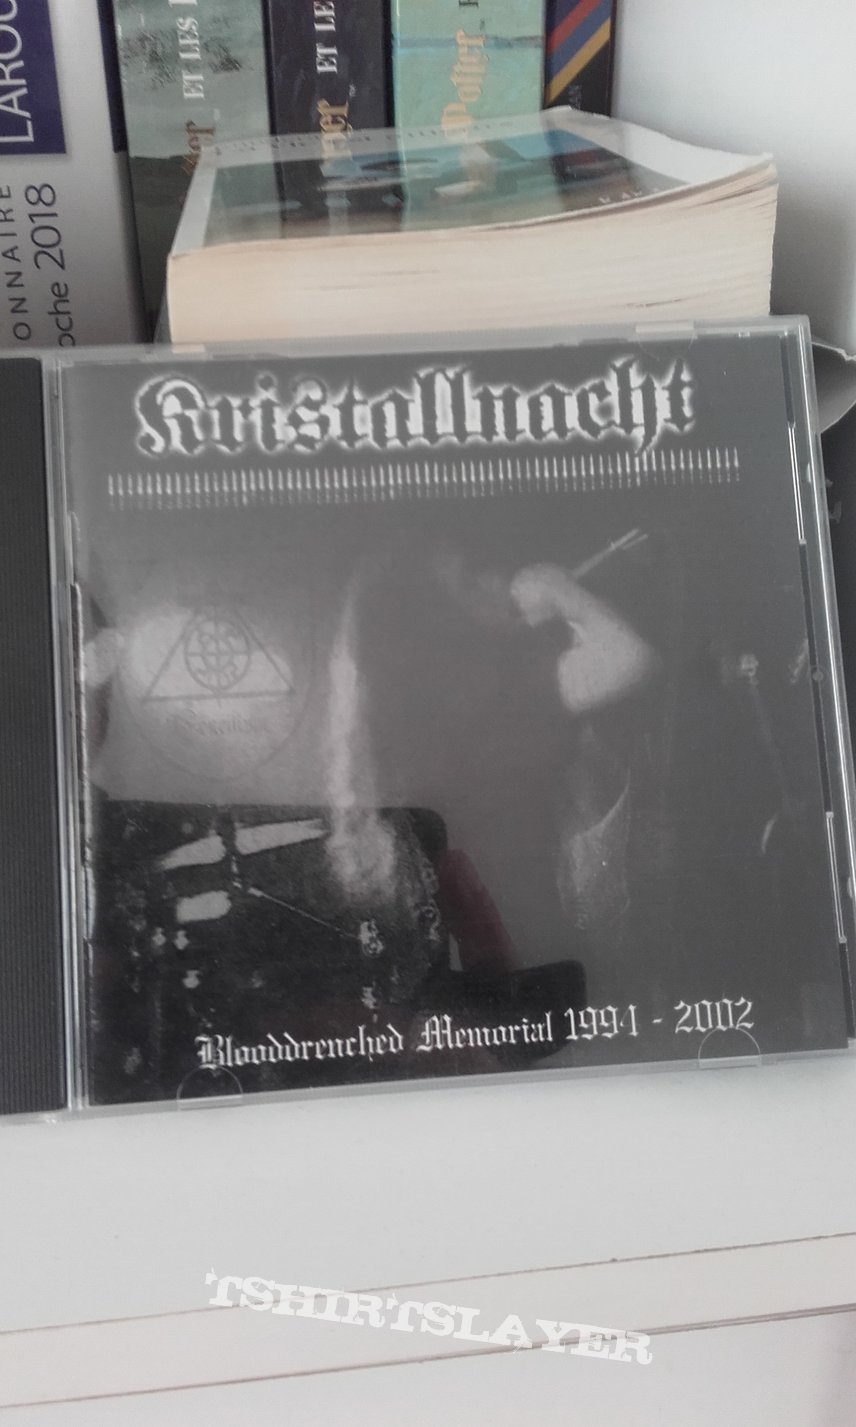 Kristallnacht CD